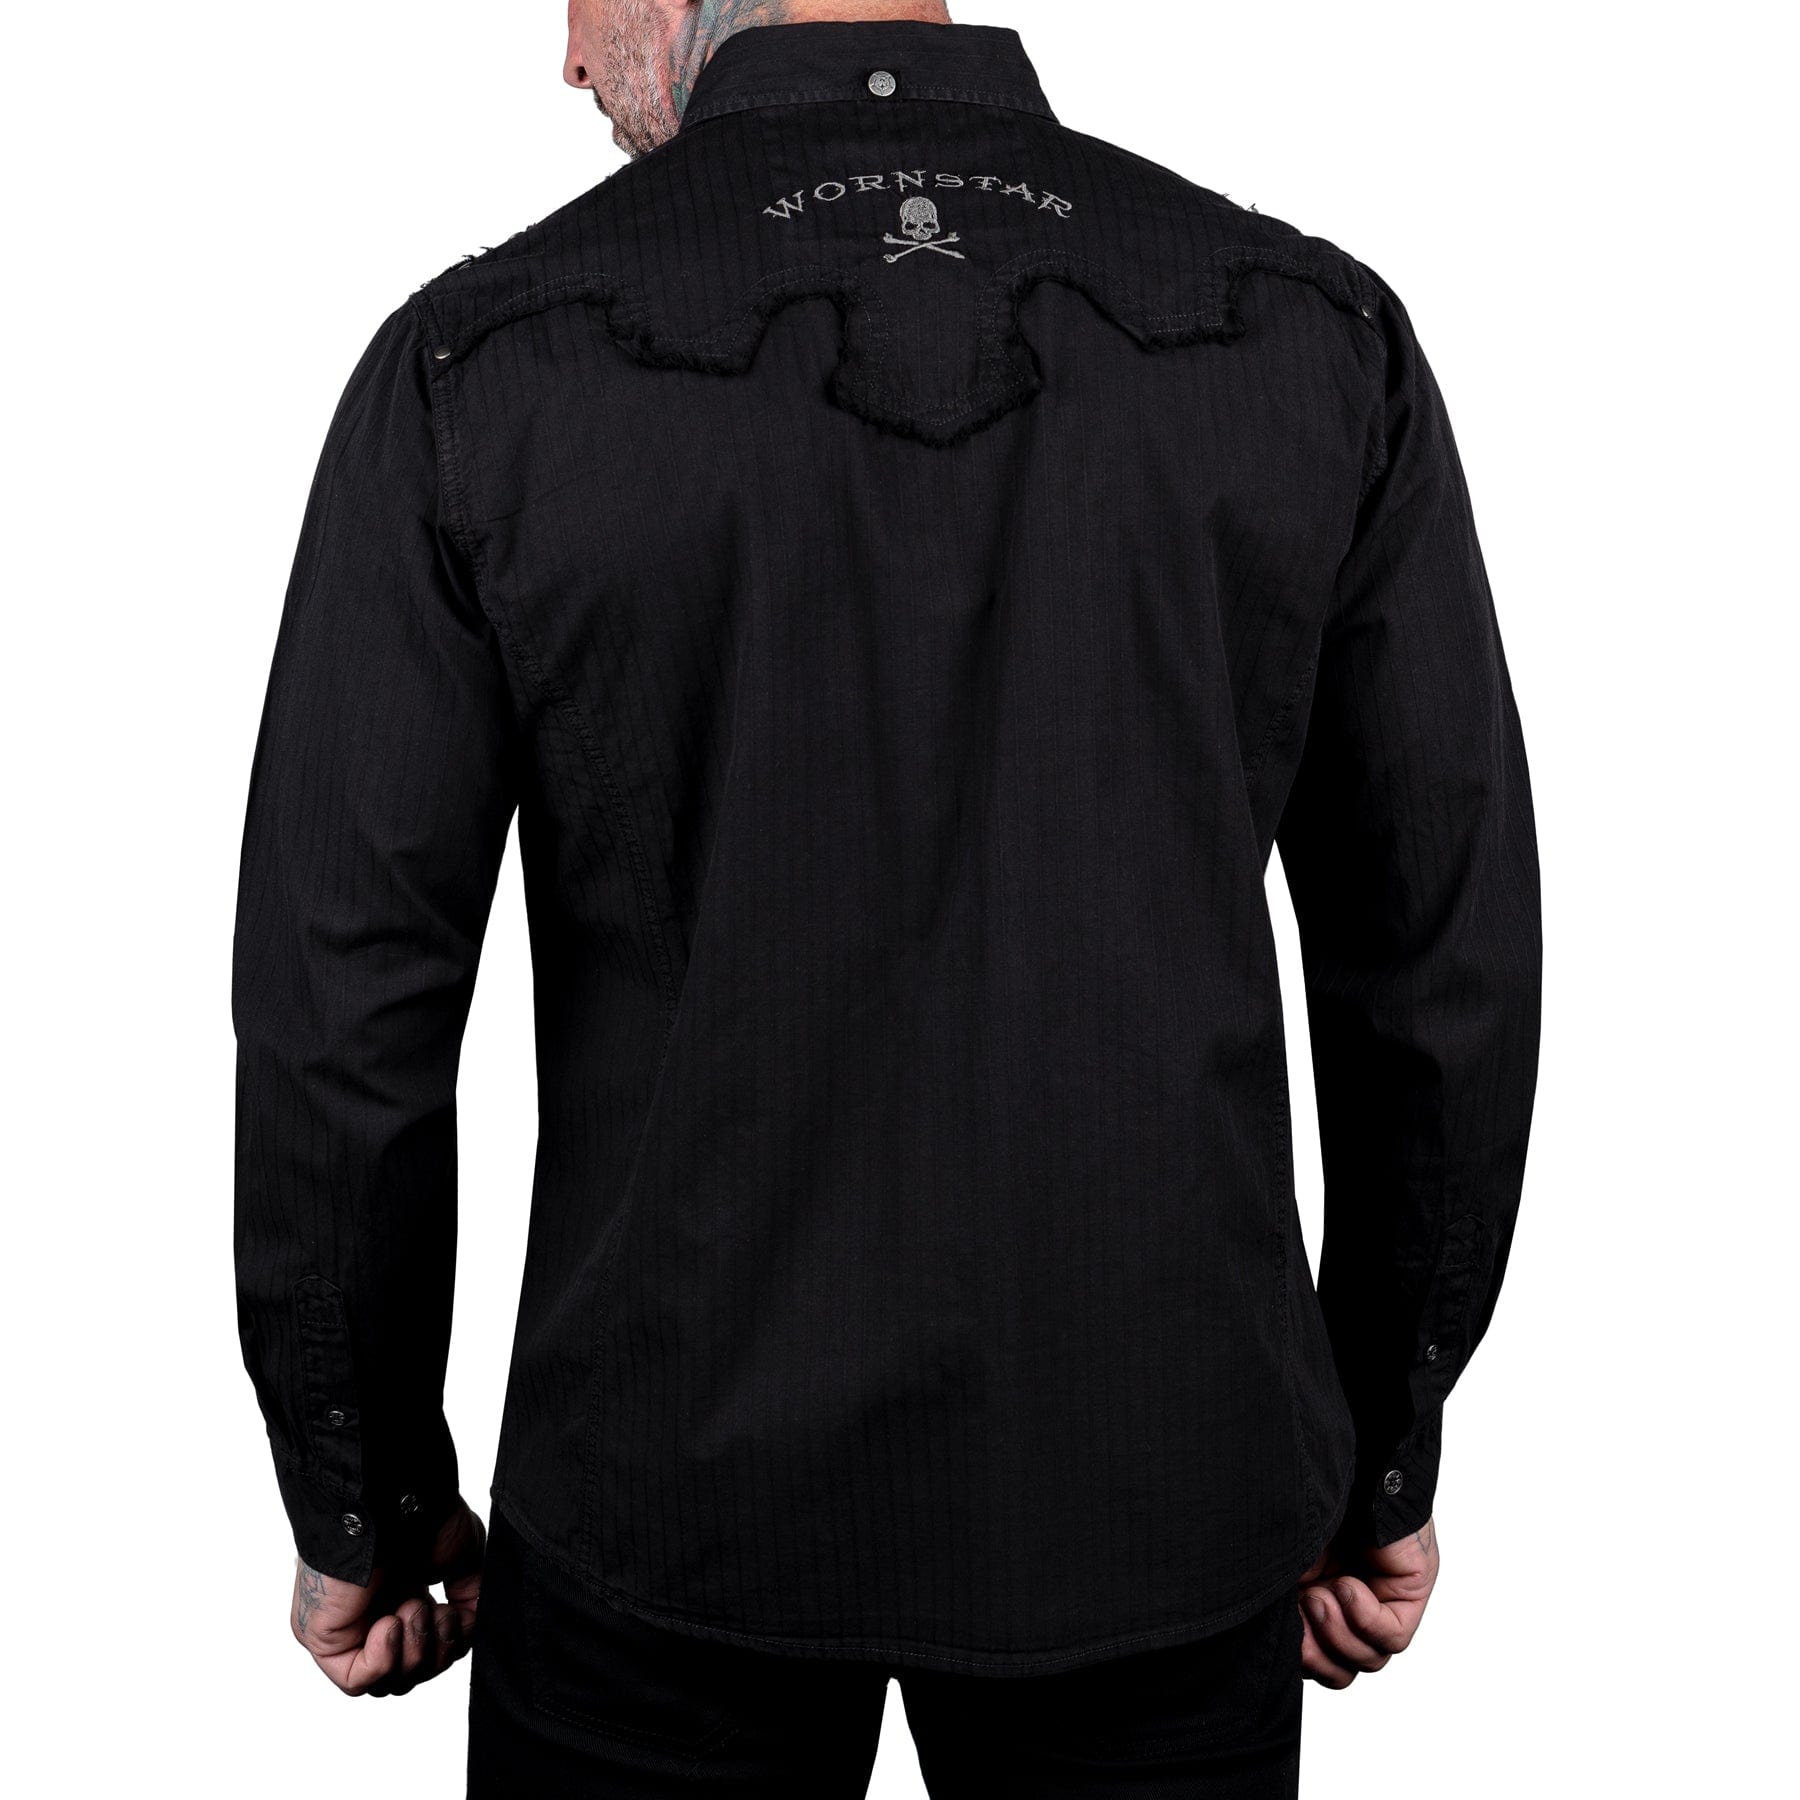 Rocknrolla Collection Button Down Raider Shirt - Black